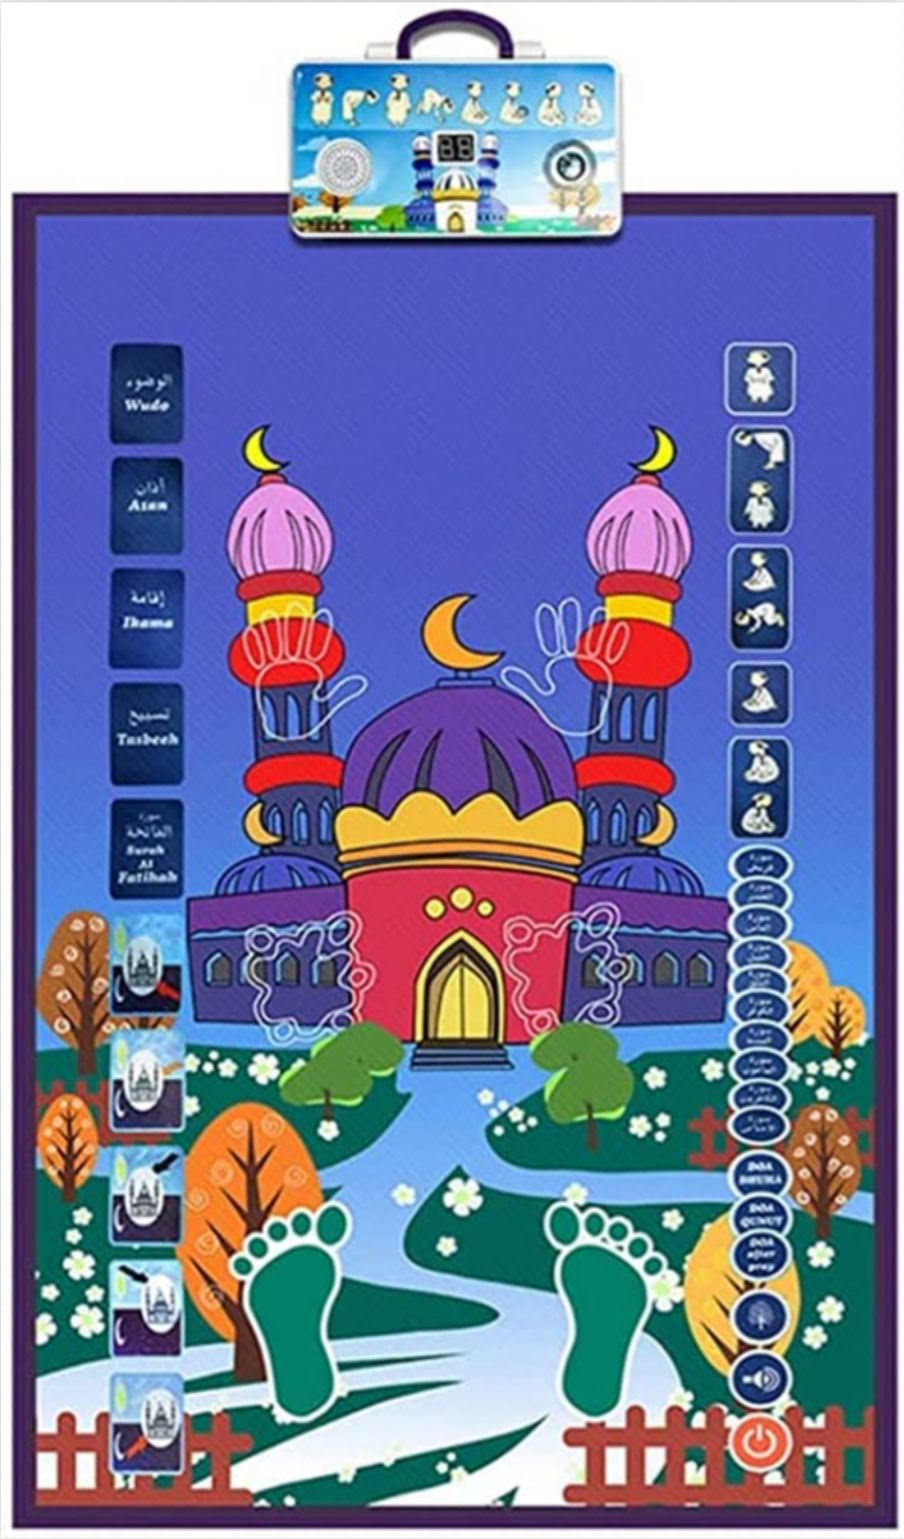 Tapis de prière interactif éducatif musulman